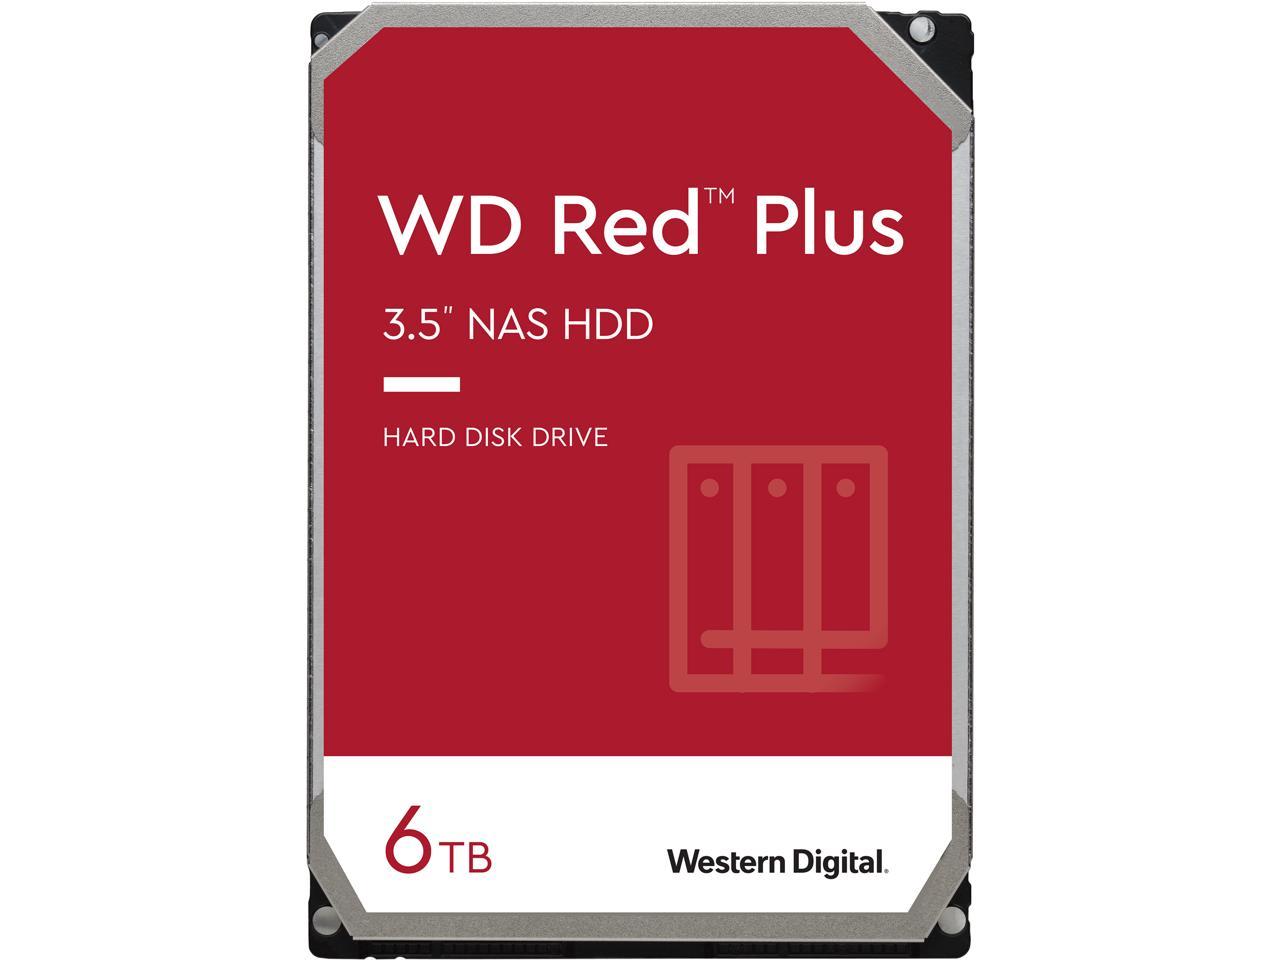 6TB WD Red Plus 5640 RPM SATA 3.5" NAS Hard Disk Drive $100 at Newegg